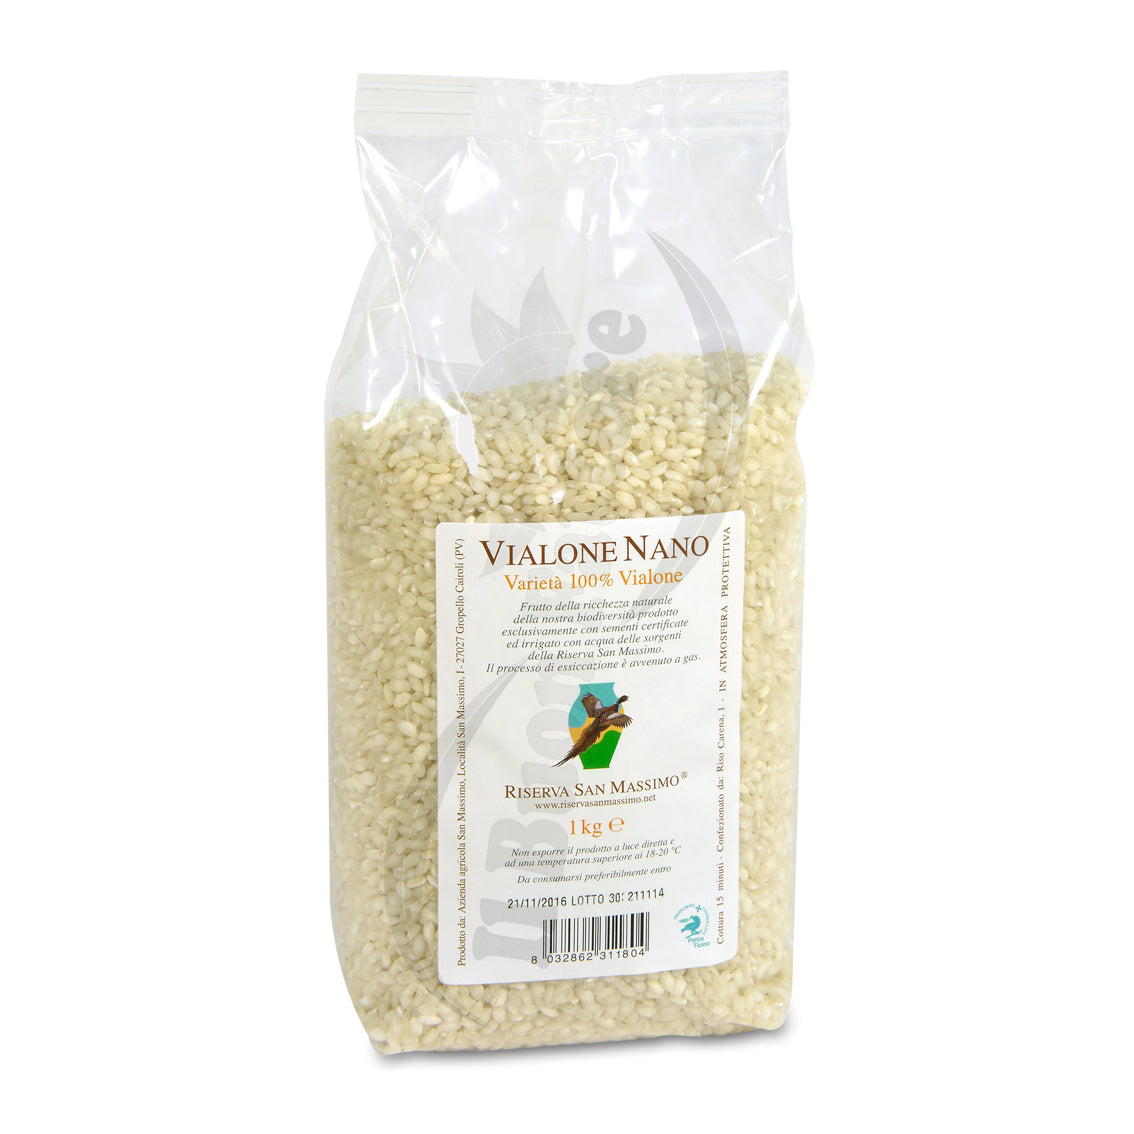 Super Premium Vialone Nano Rice